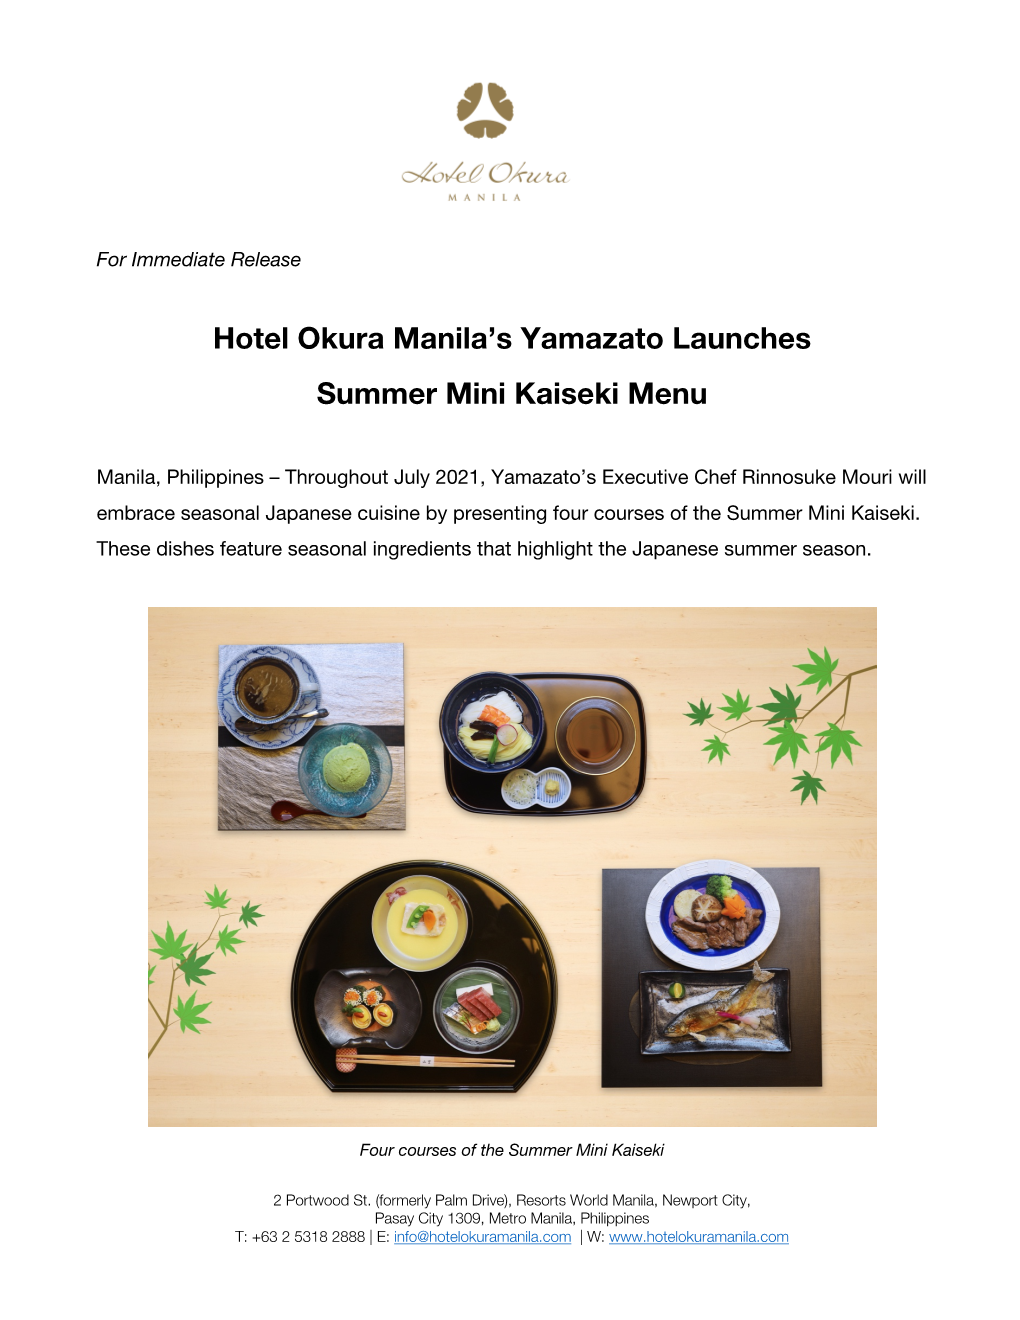 Hotel Okura Manila's Yamazato Launches Summer Mini Kaiseki Menu